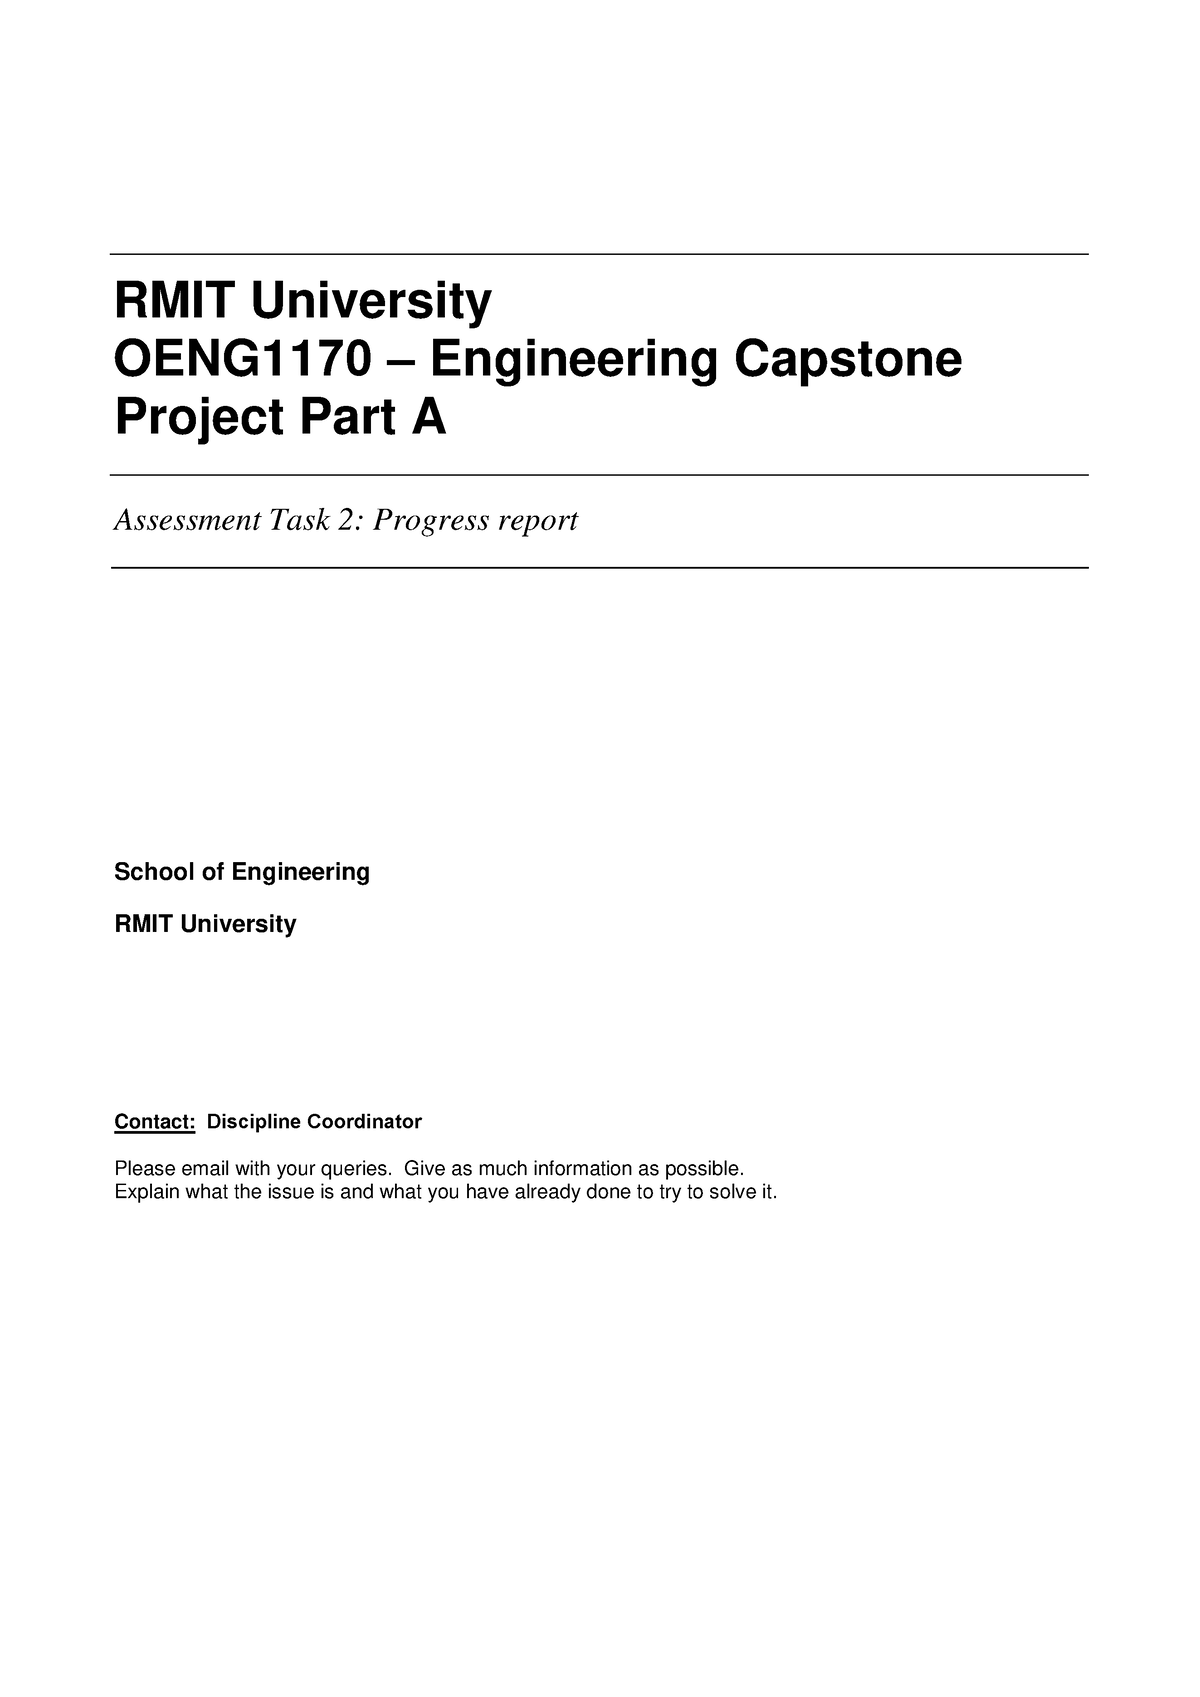 rmit engineering capstone project